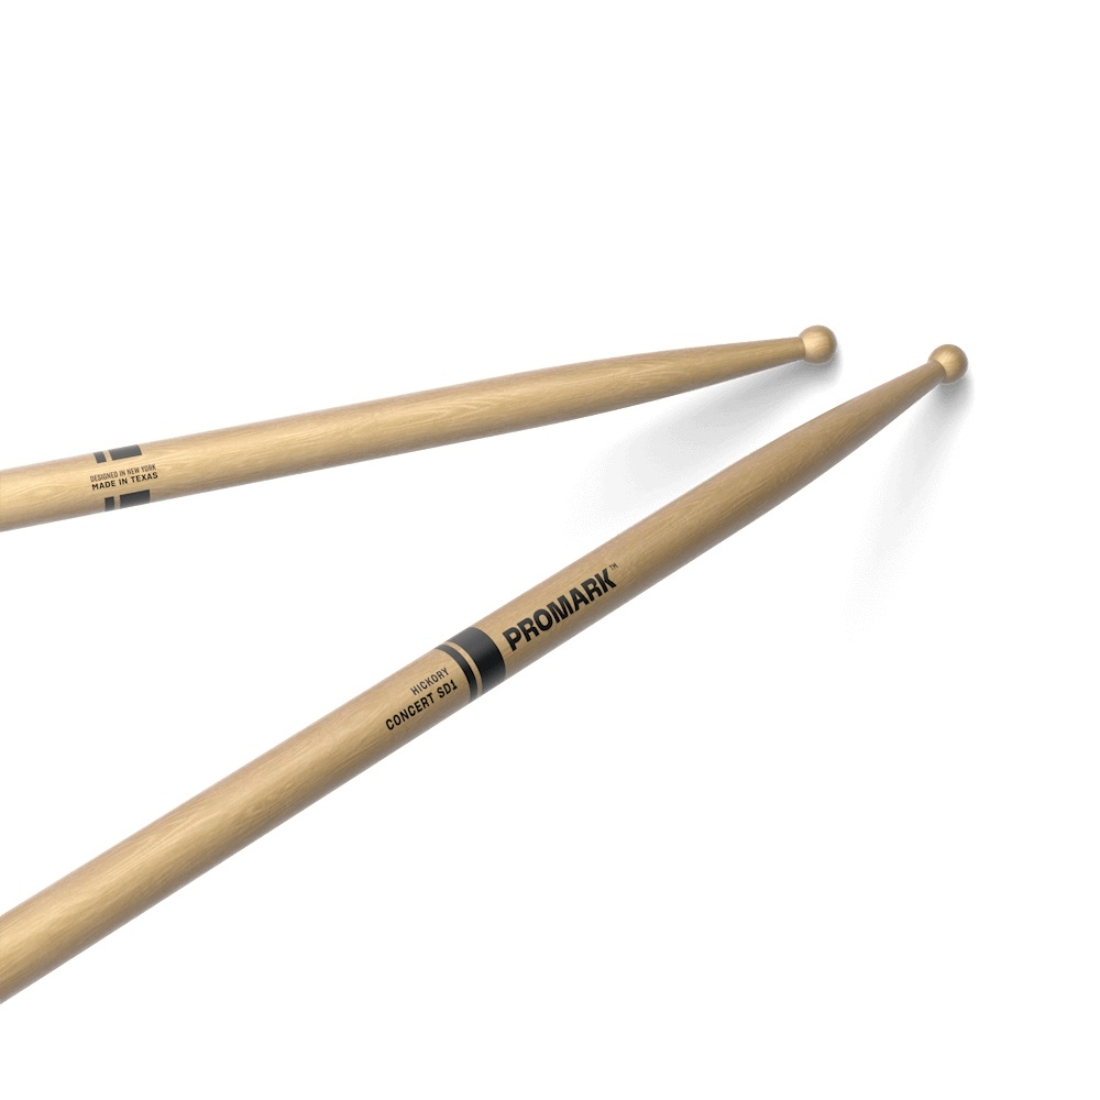 Hickory ProMark drumsticks - size SD1